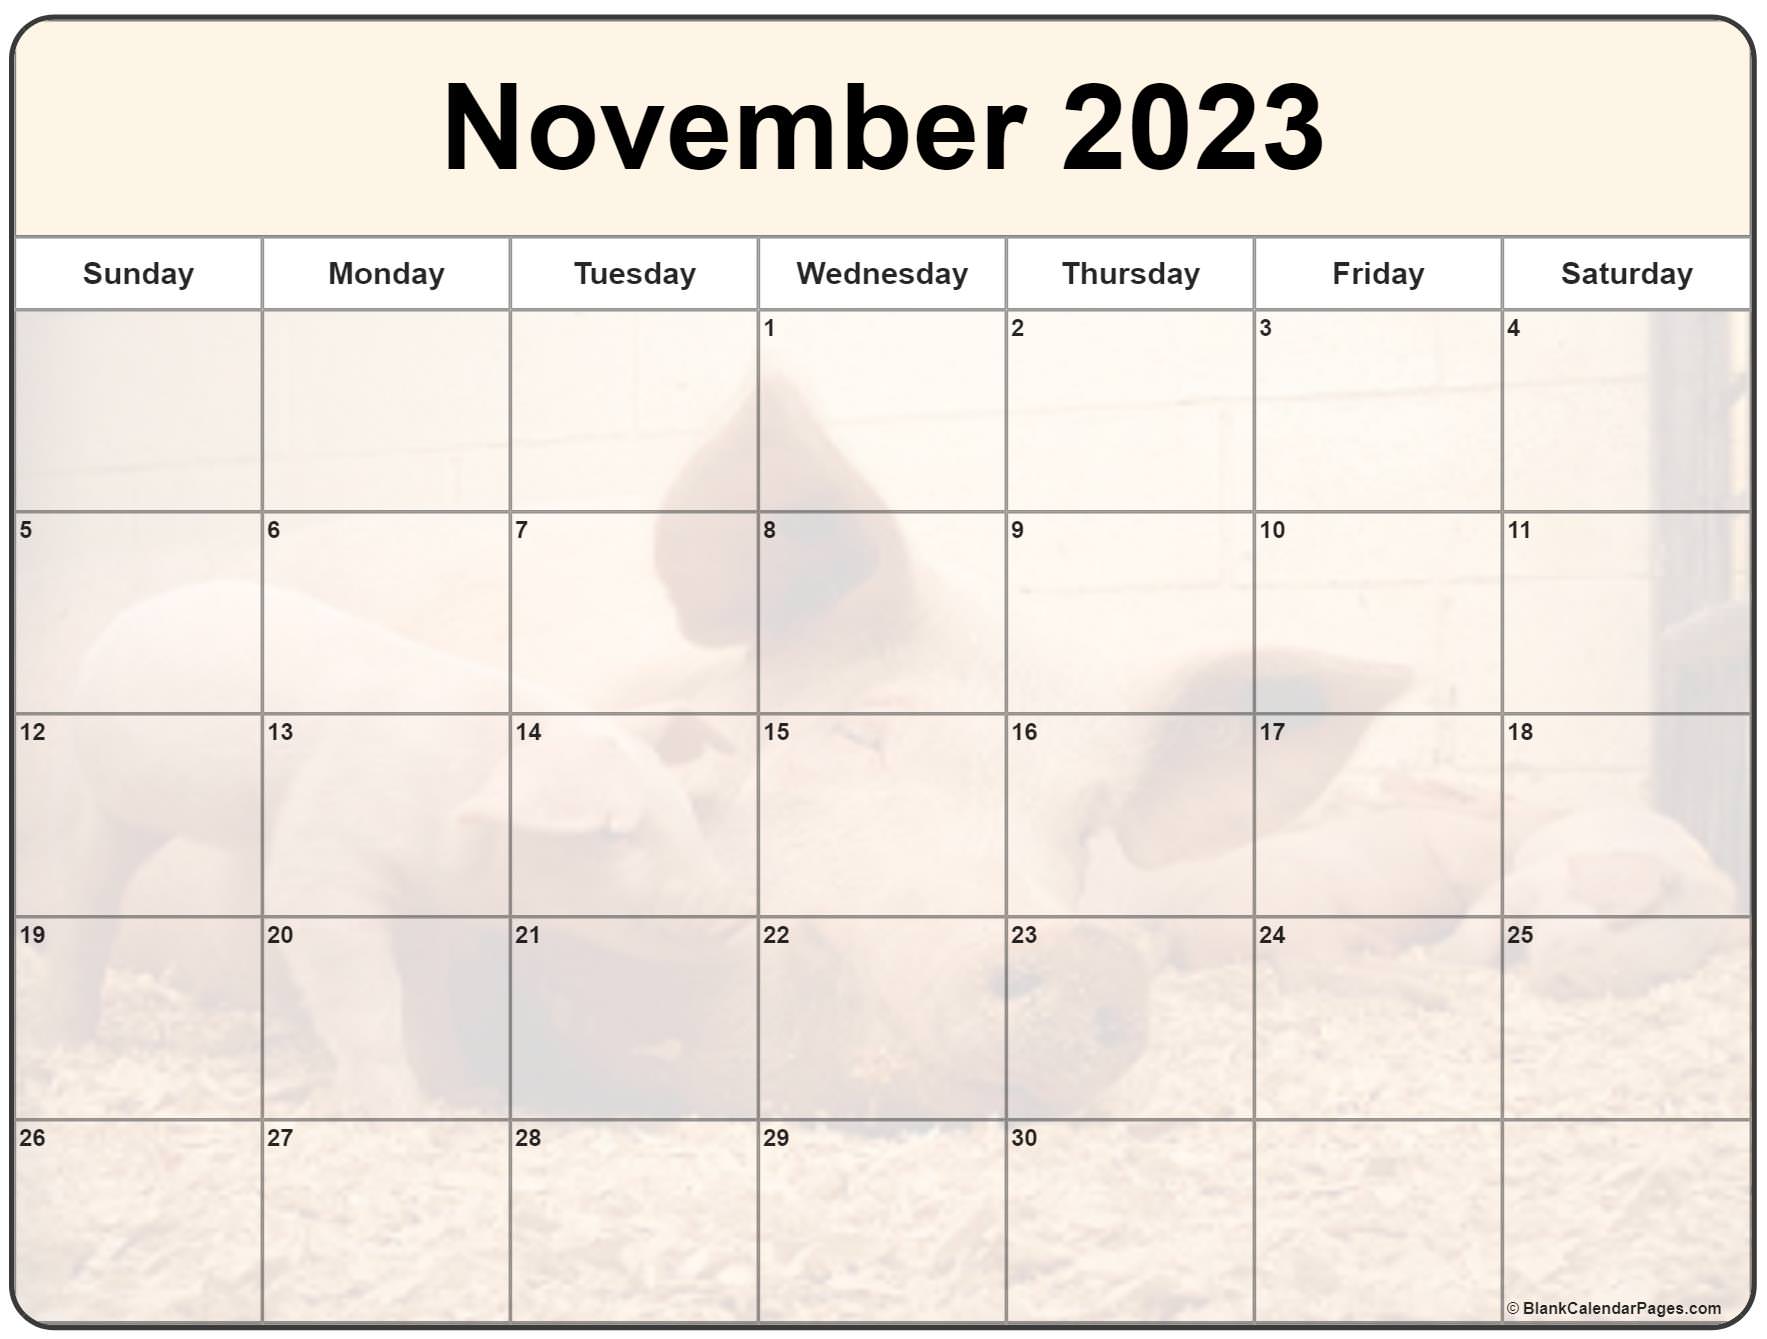 Blank November 2023 Calendar Recette 2023